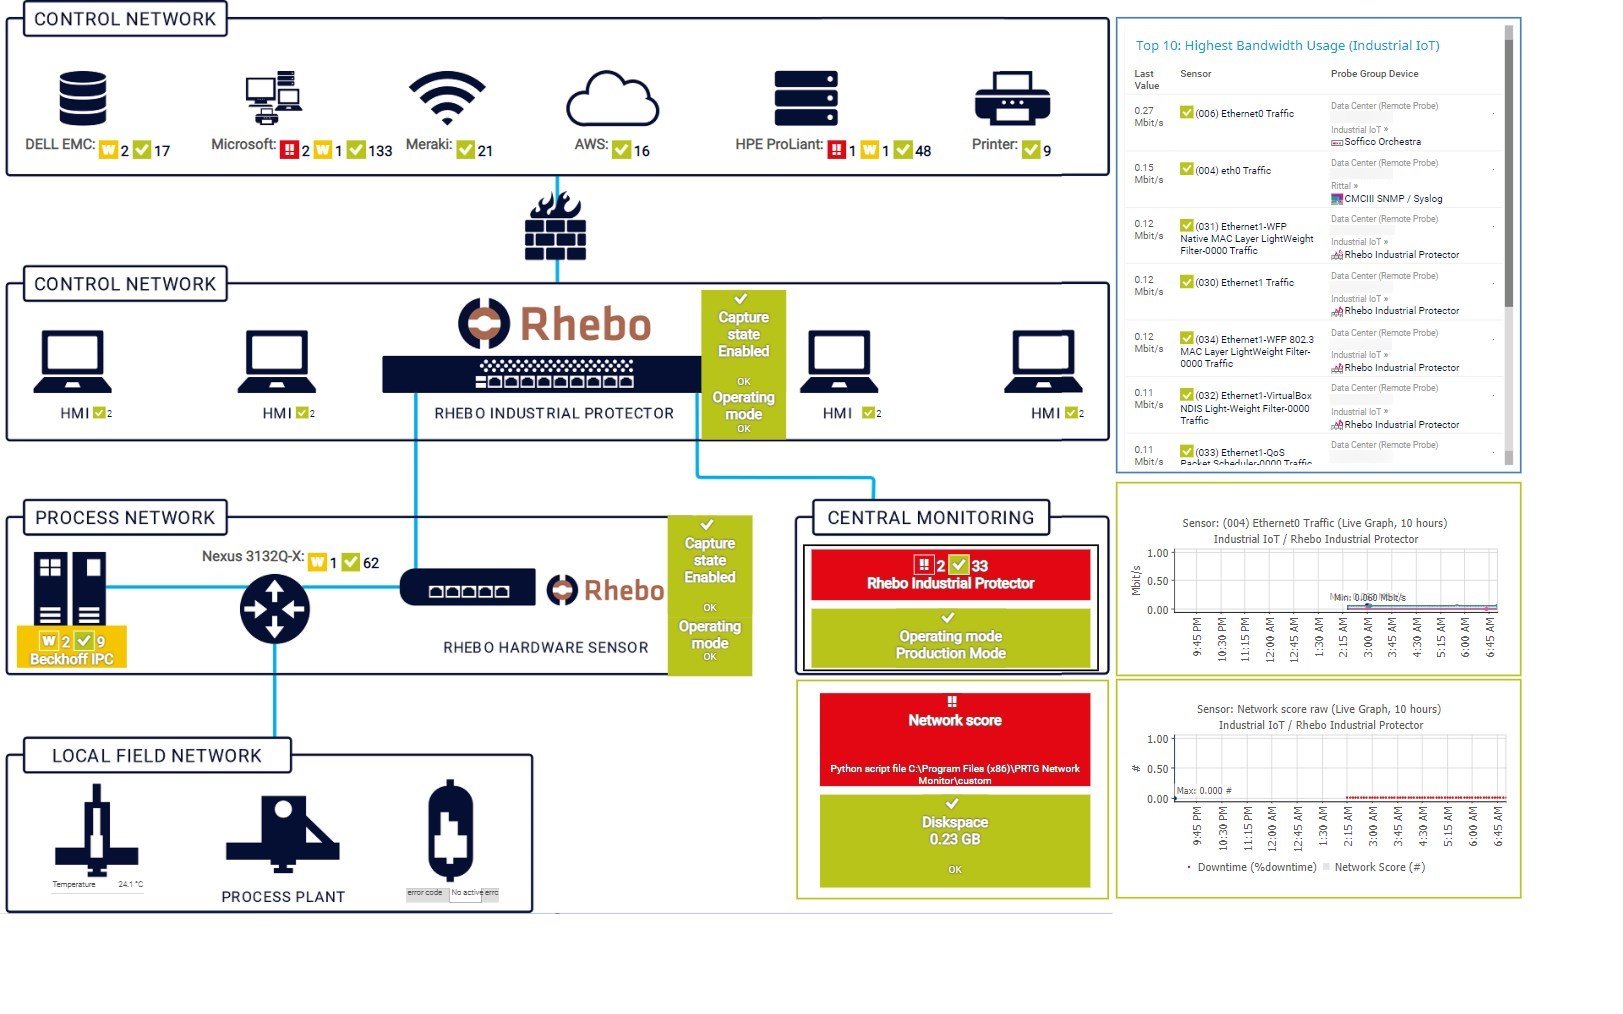 Custom PRTG map for visualizing Rhebo integration & monitoring